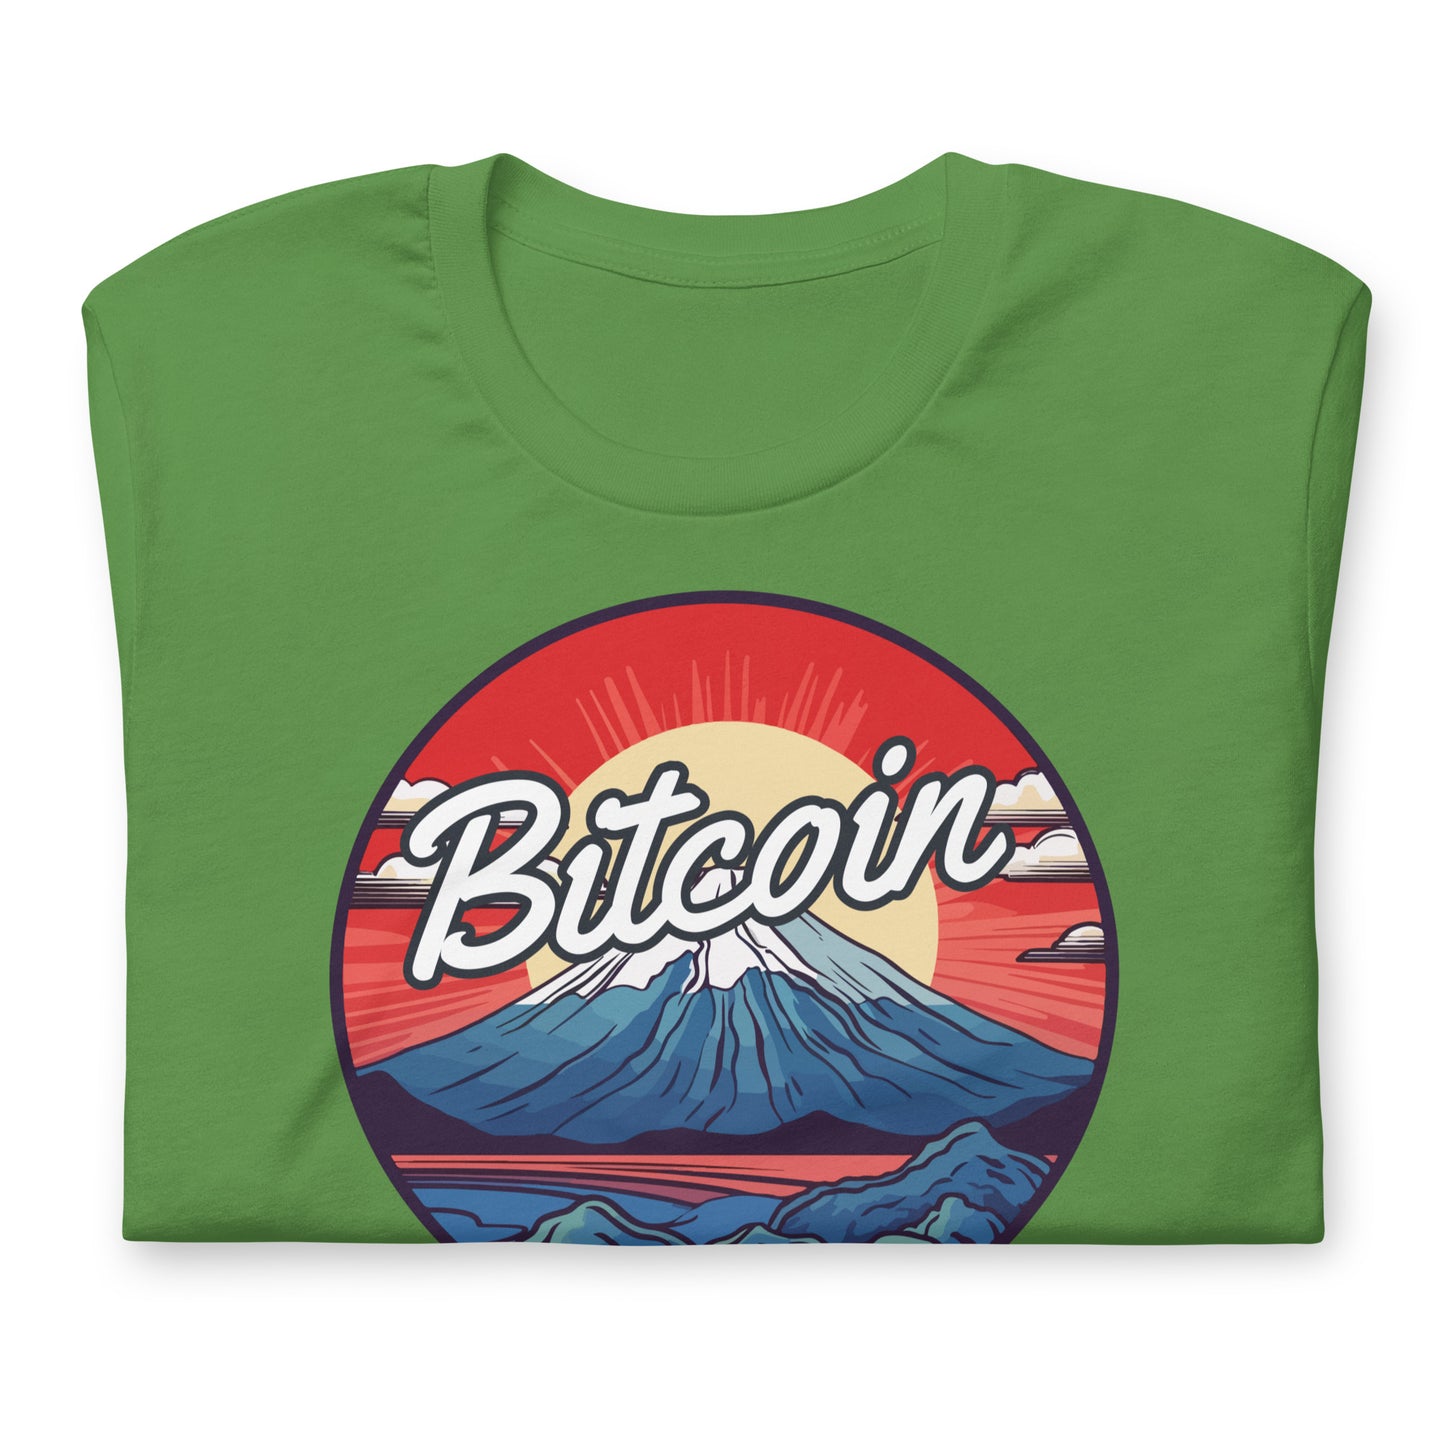 Bitcoin Sole Levante T-Shirt